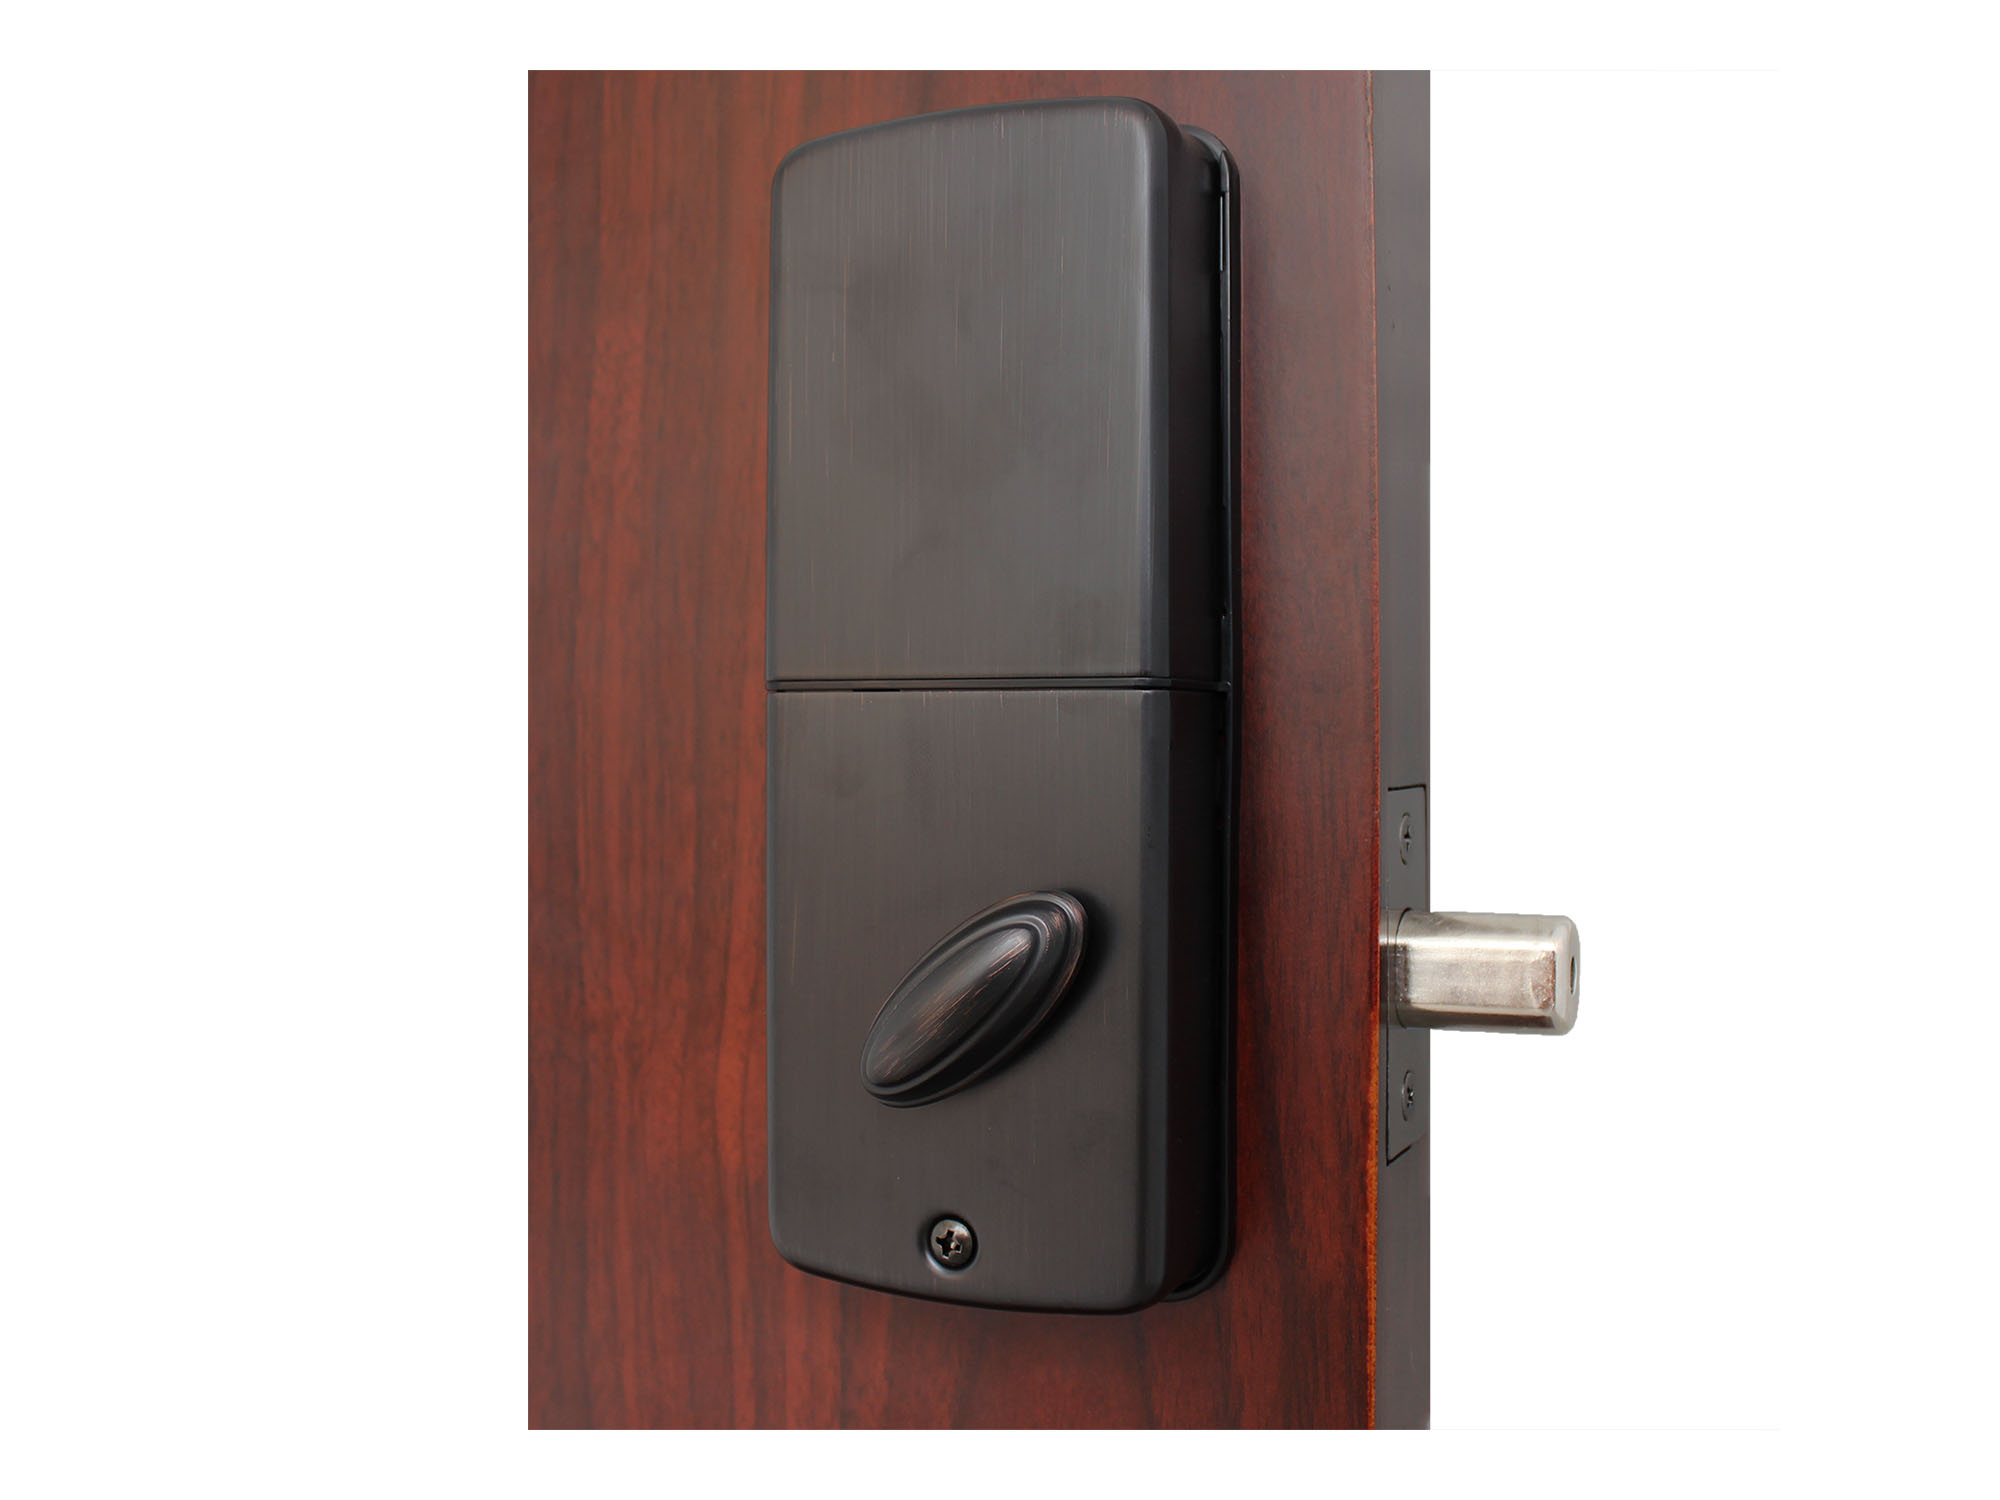 Lockey E915 Electronic Deadbolt Lock with Lighted Keypad